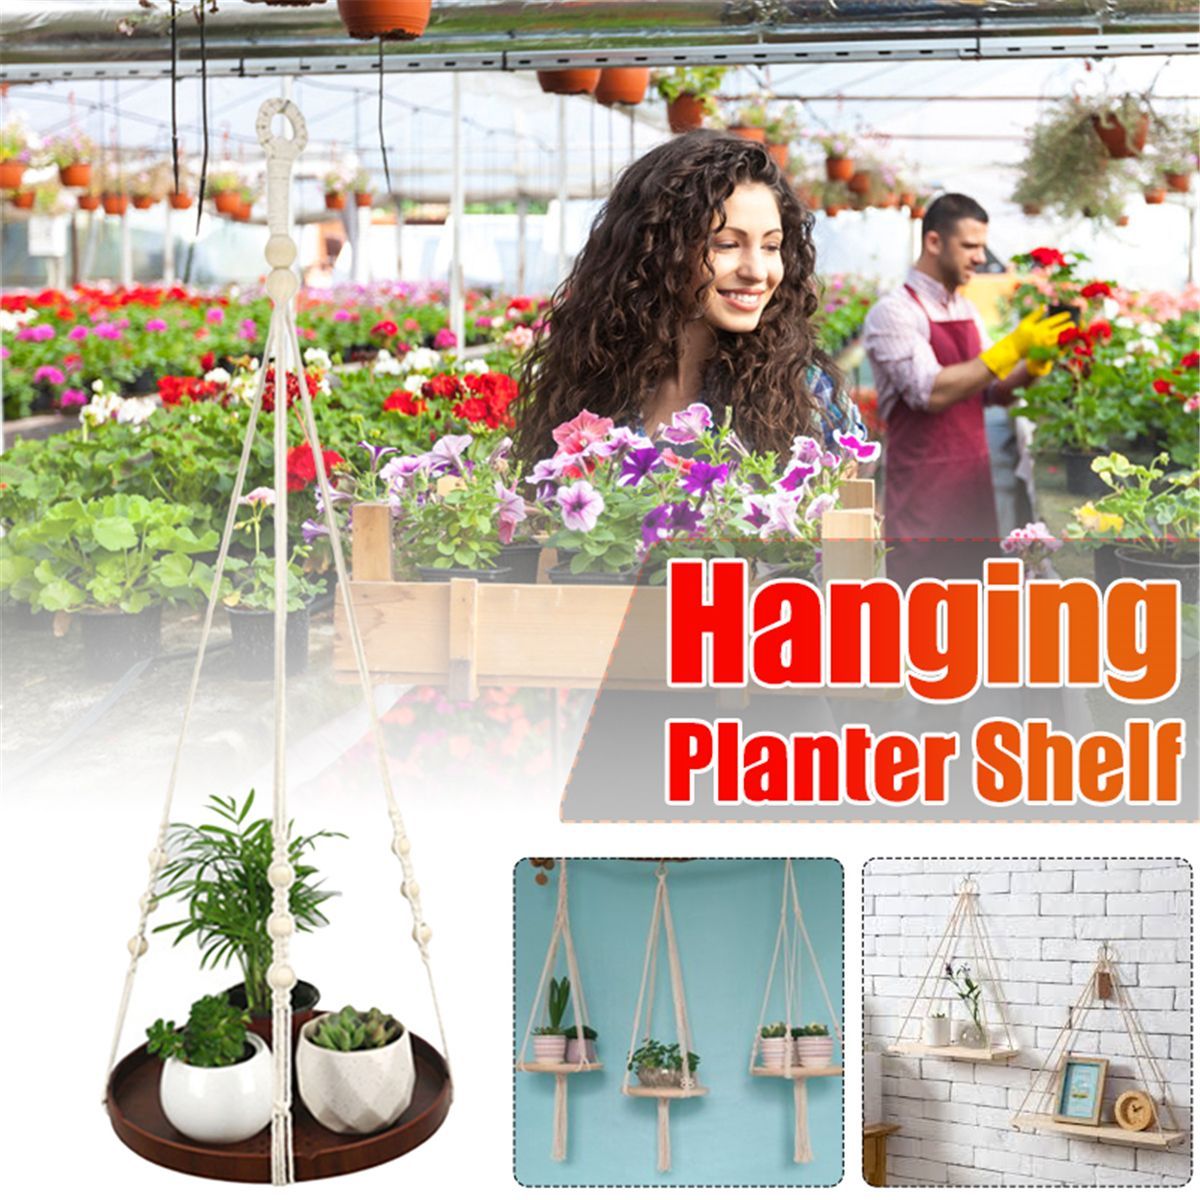 Plant-Hanger-Indoor-Outdoor-Hanging-Plant-Holder-Hanging-Planter-Stand-Flower-Pots-for-Decorations-1729387